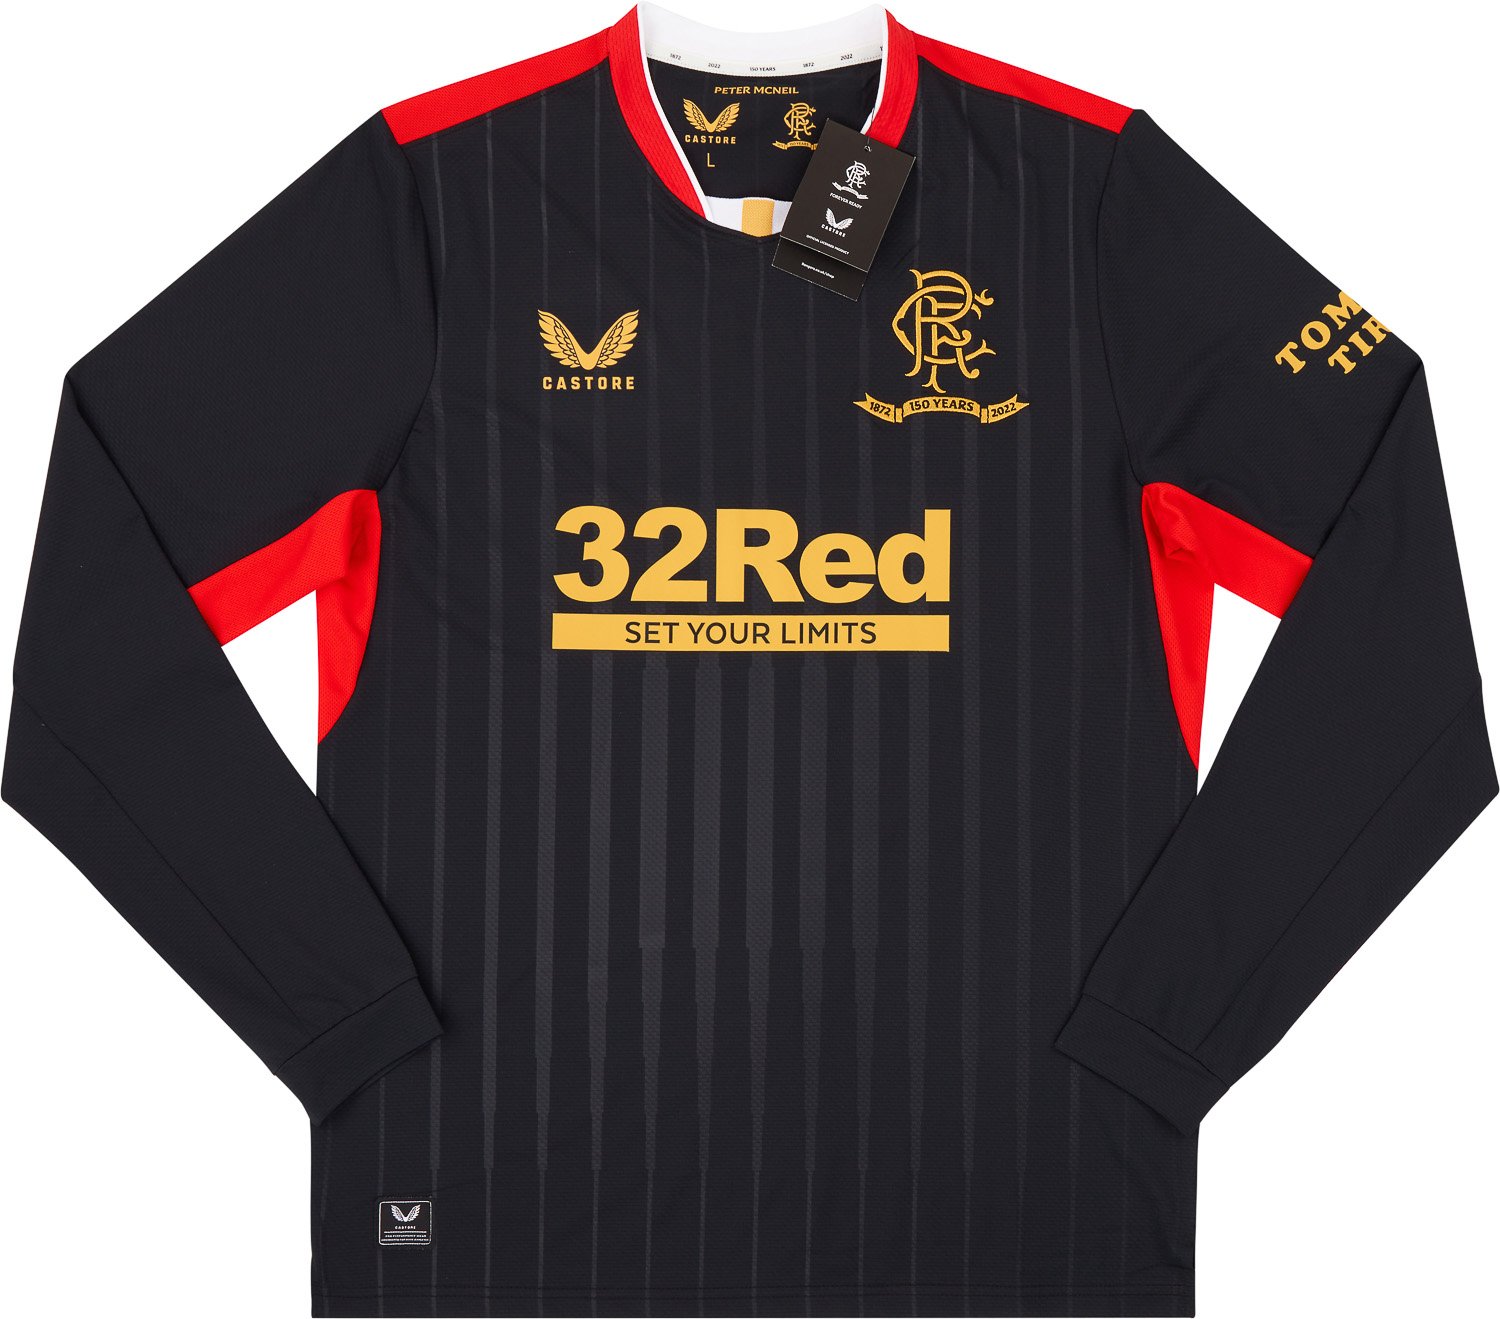 Rangers Away Kit - Official Shirts 22/23